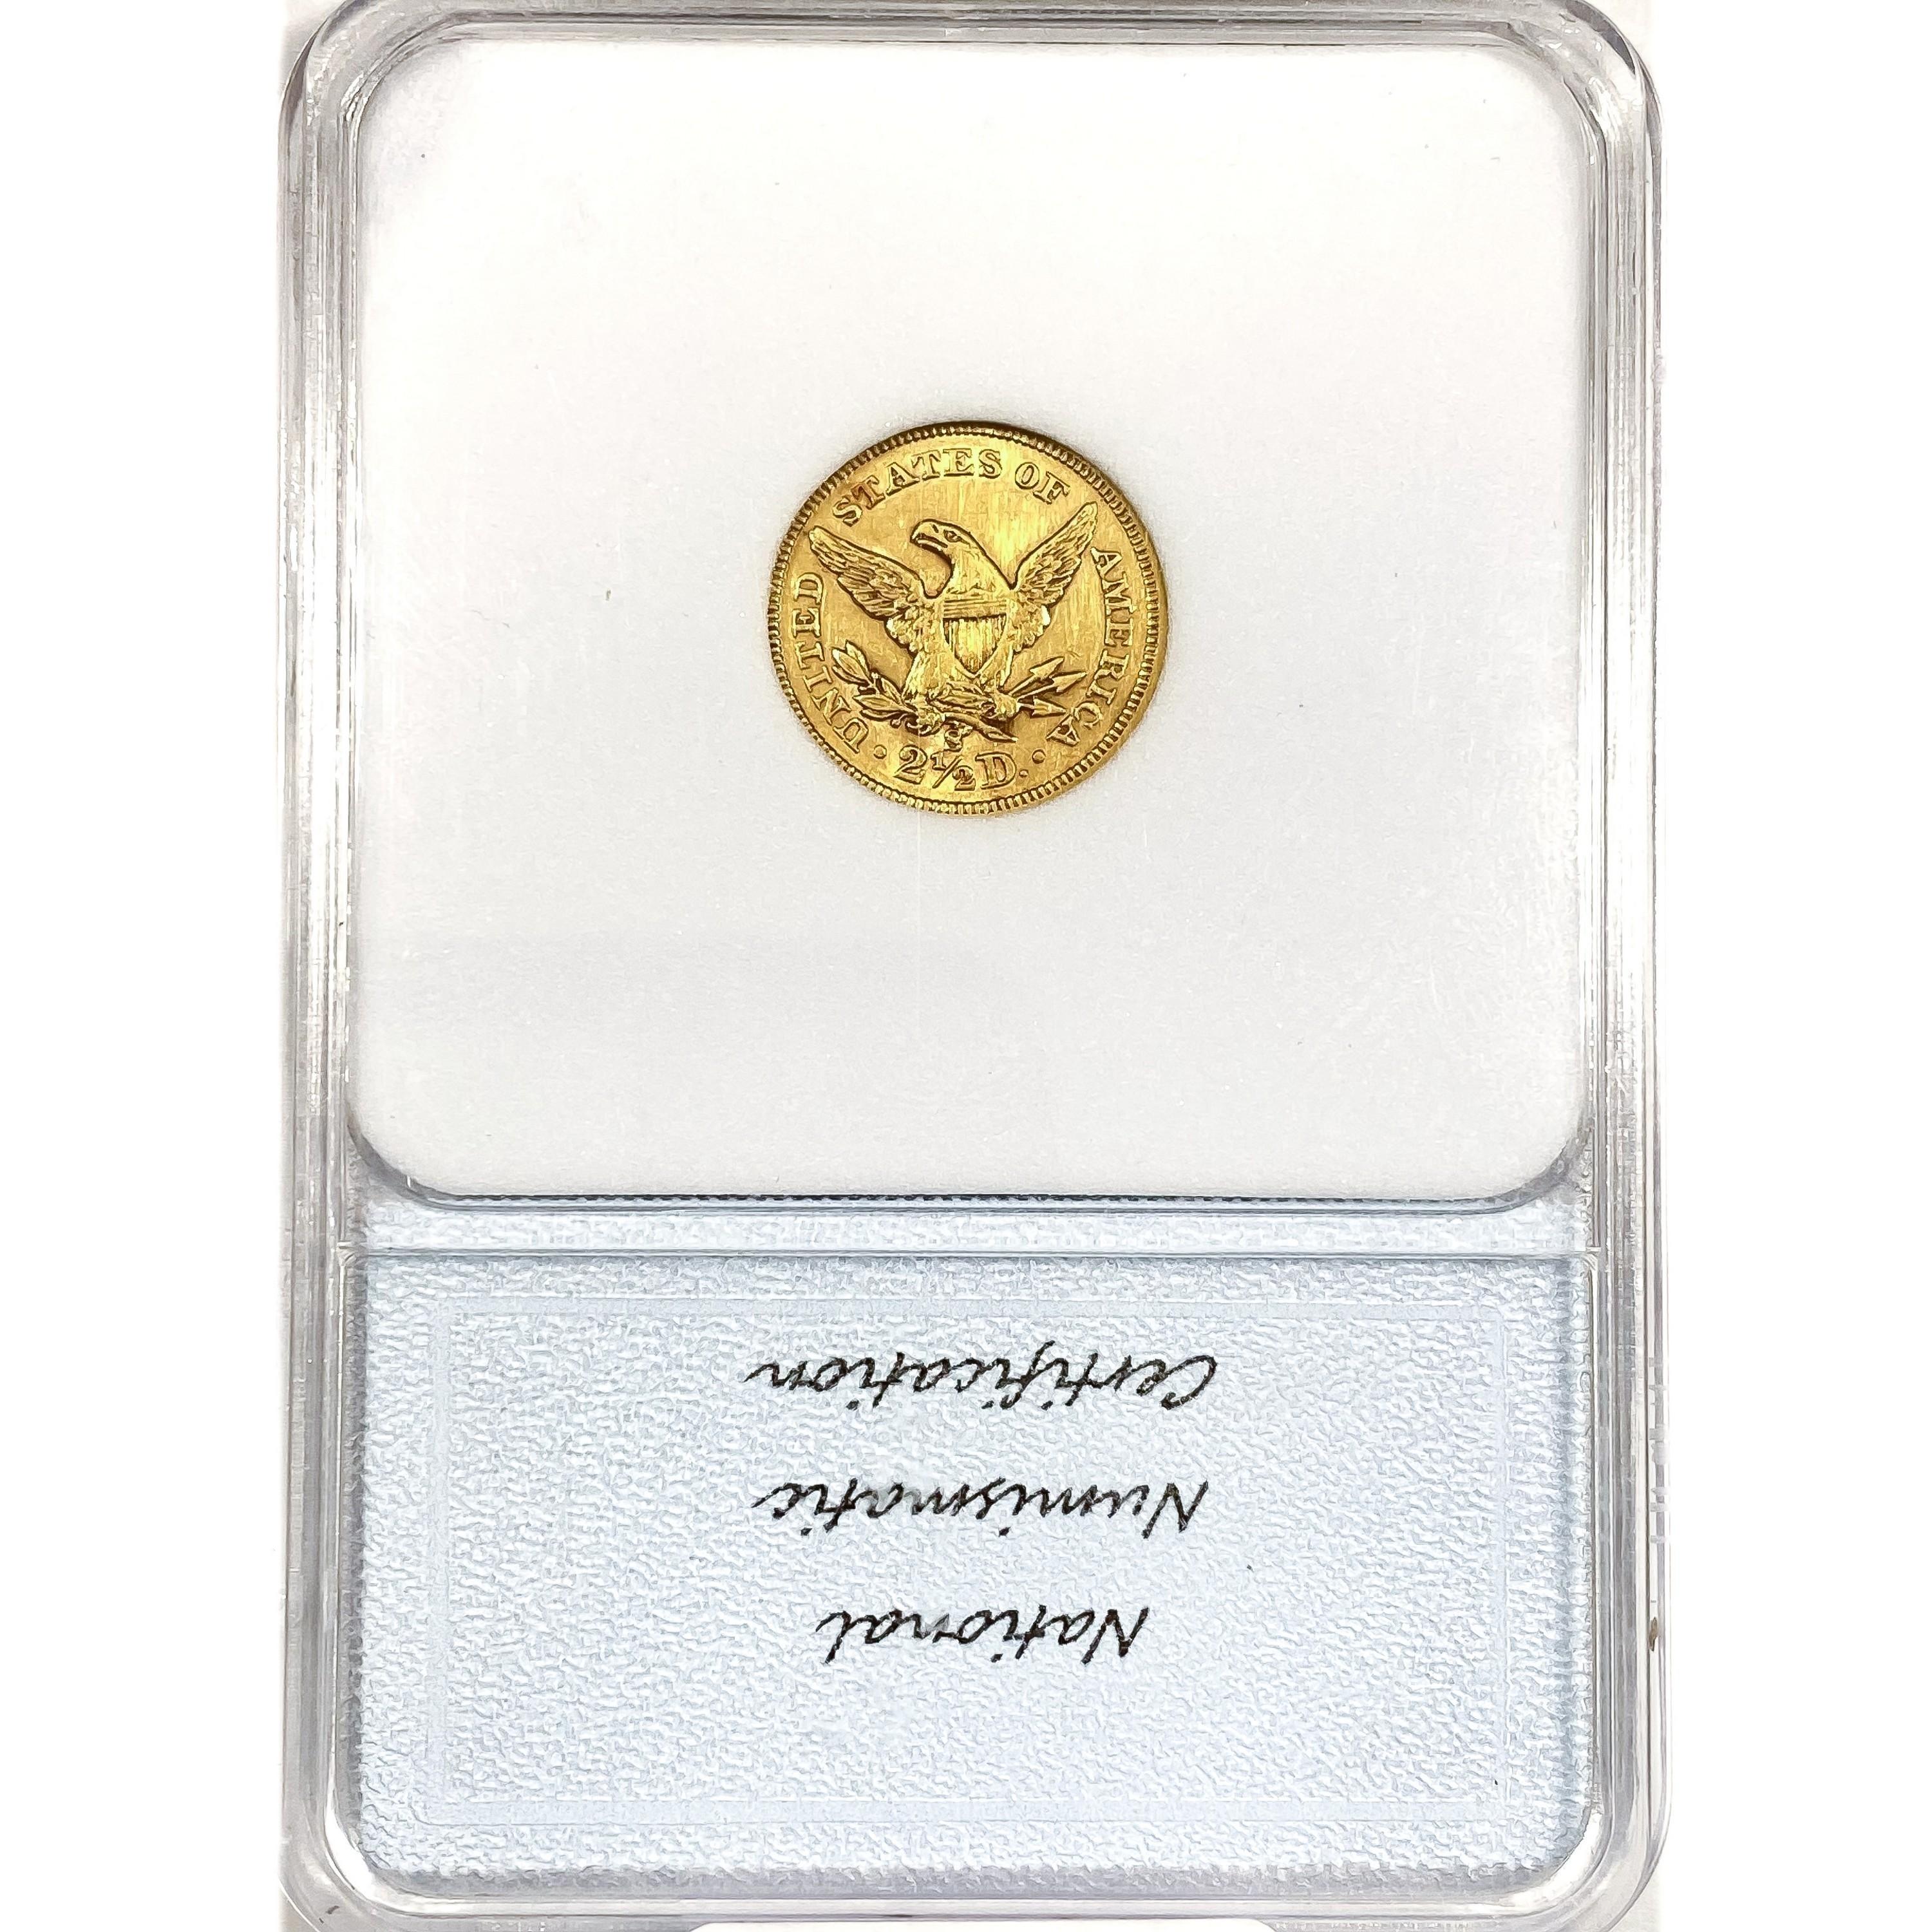 1873-S $2.50 Gold Quarter Eagle NNC MS61